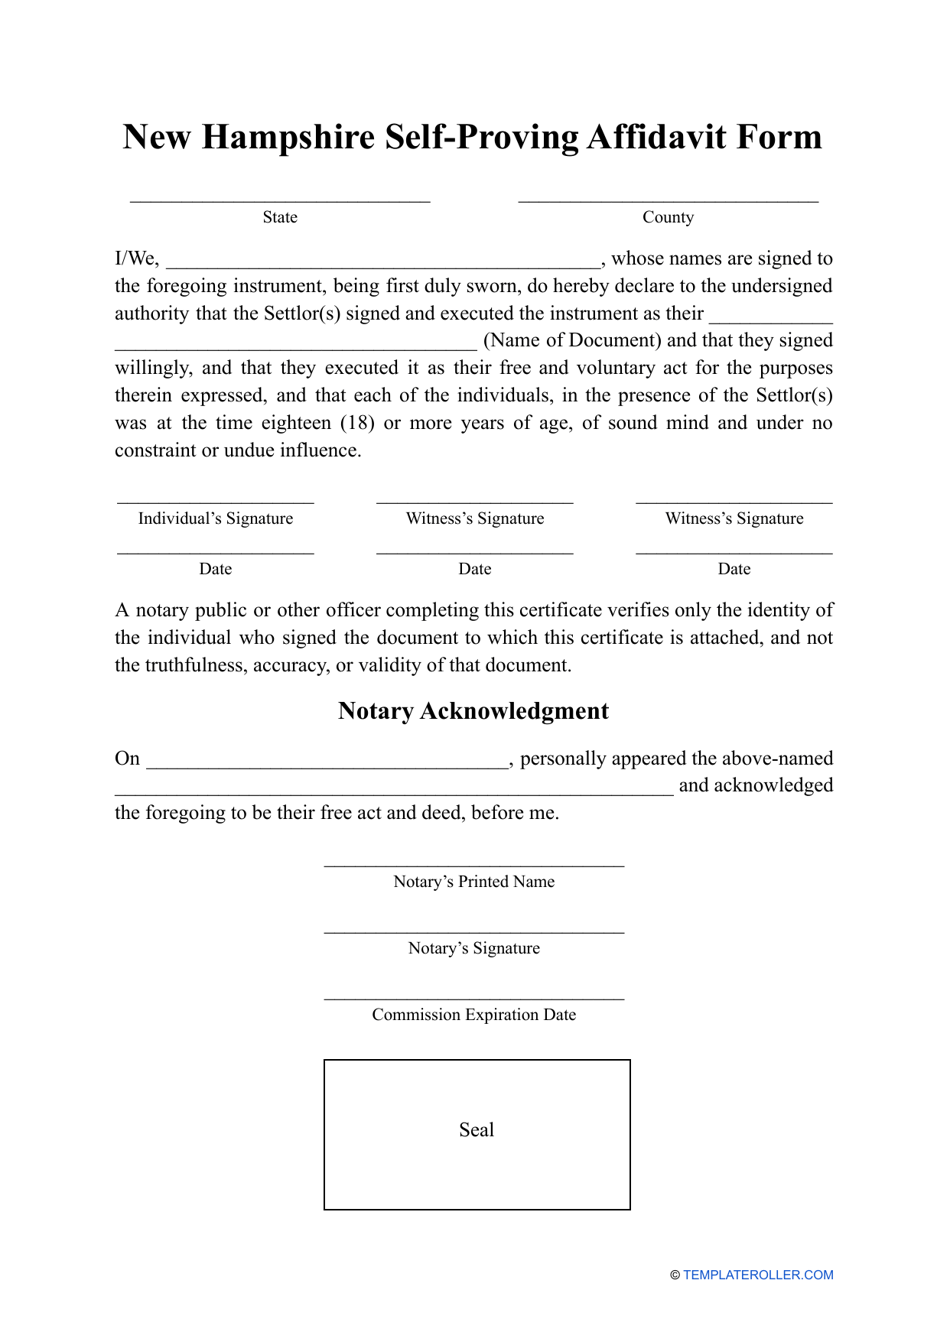 Self-proving Affidavit Form - New Hampshire, Page 1